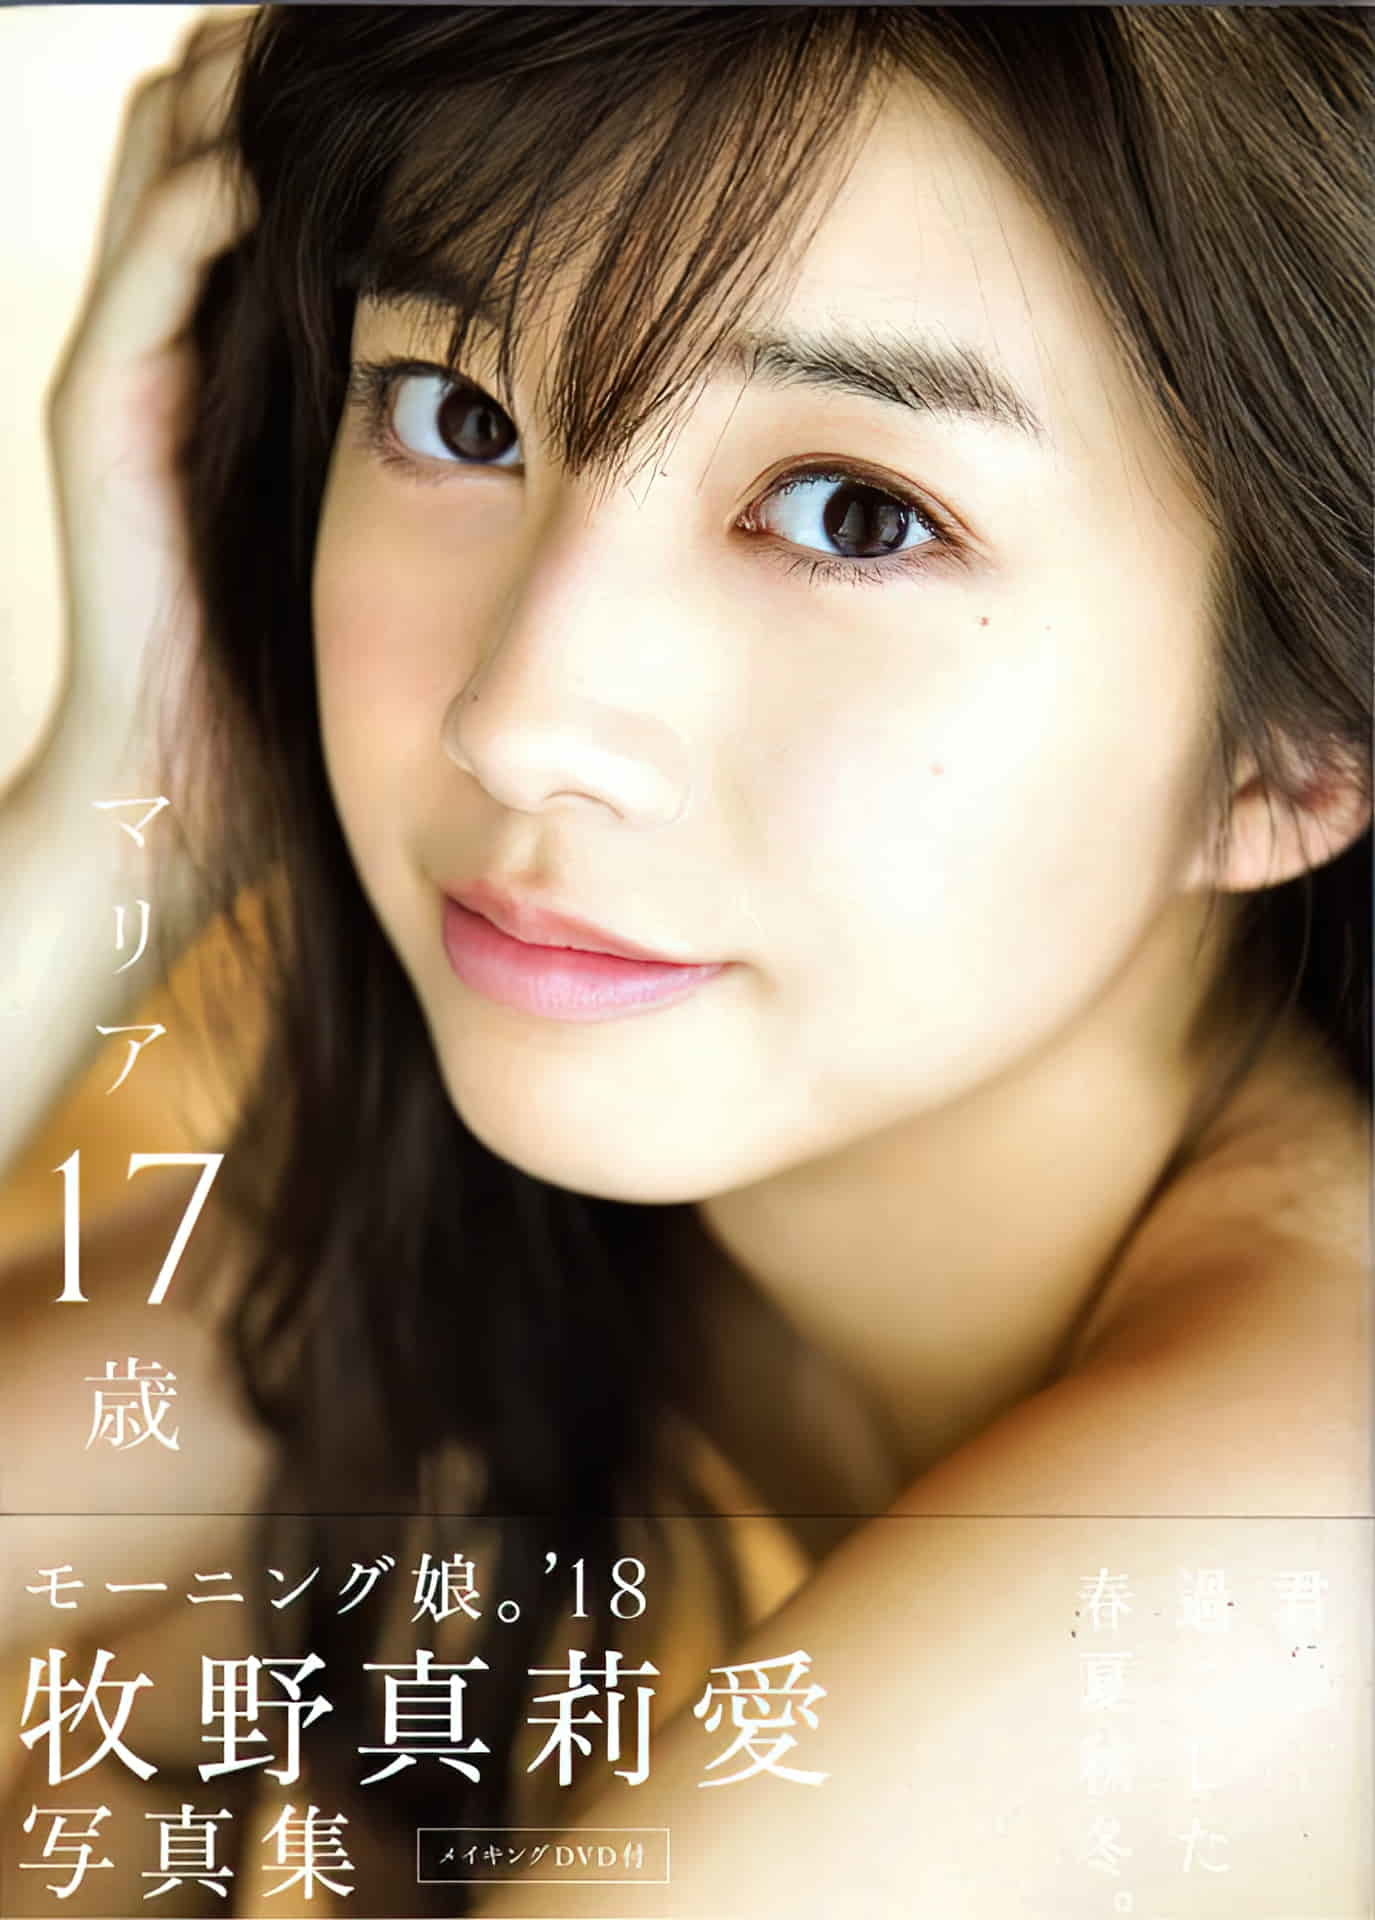 [Photobook] Maria Makino 牧野真莉愛 - Maria 17 years old